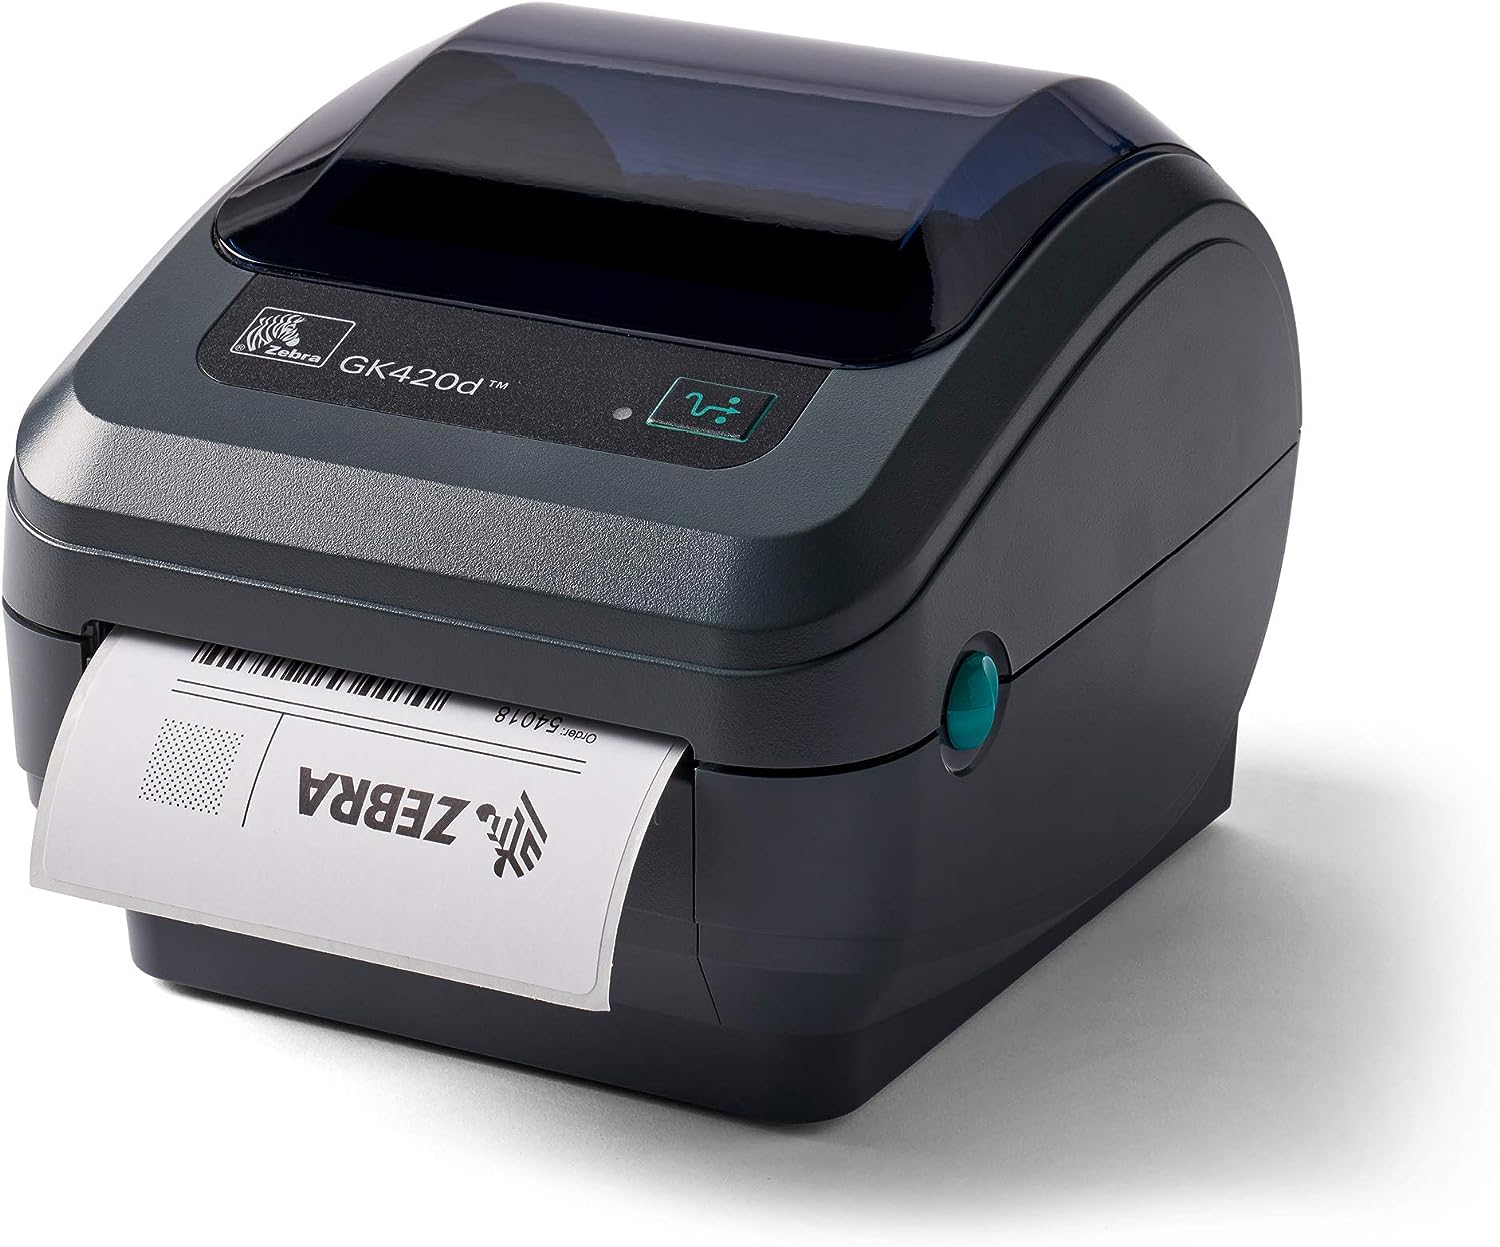 zebra label printer detailed review